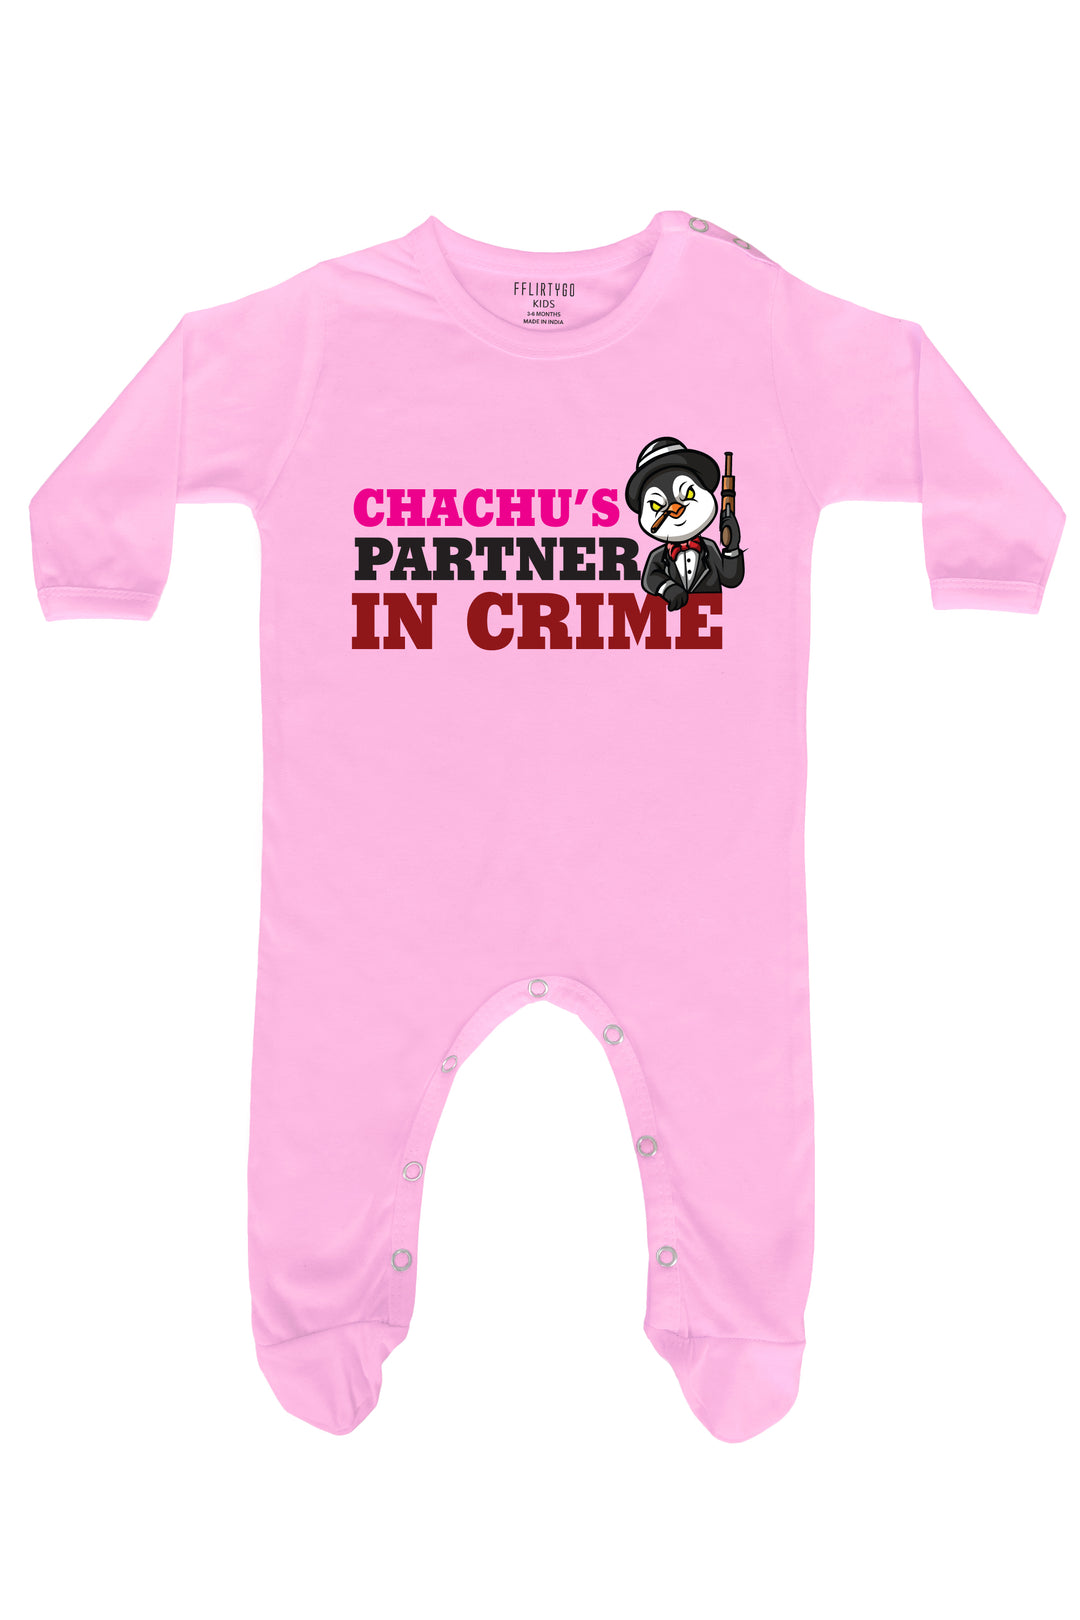 Chachu's Partner In Crime Baby Romper | Onesies